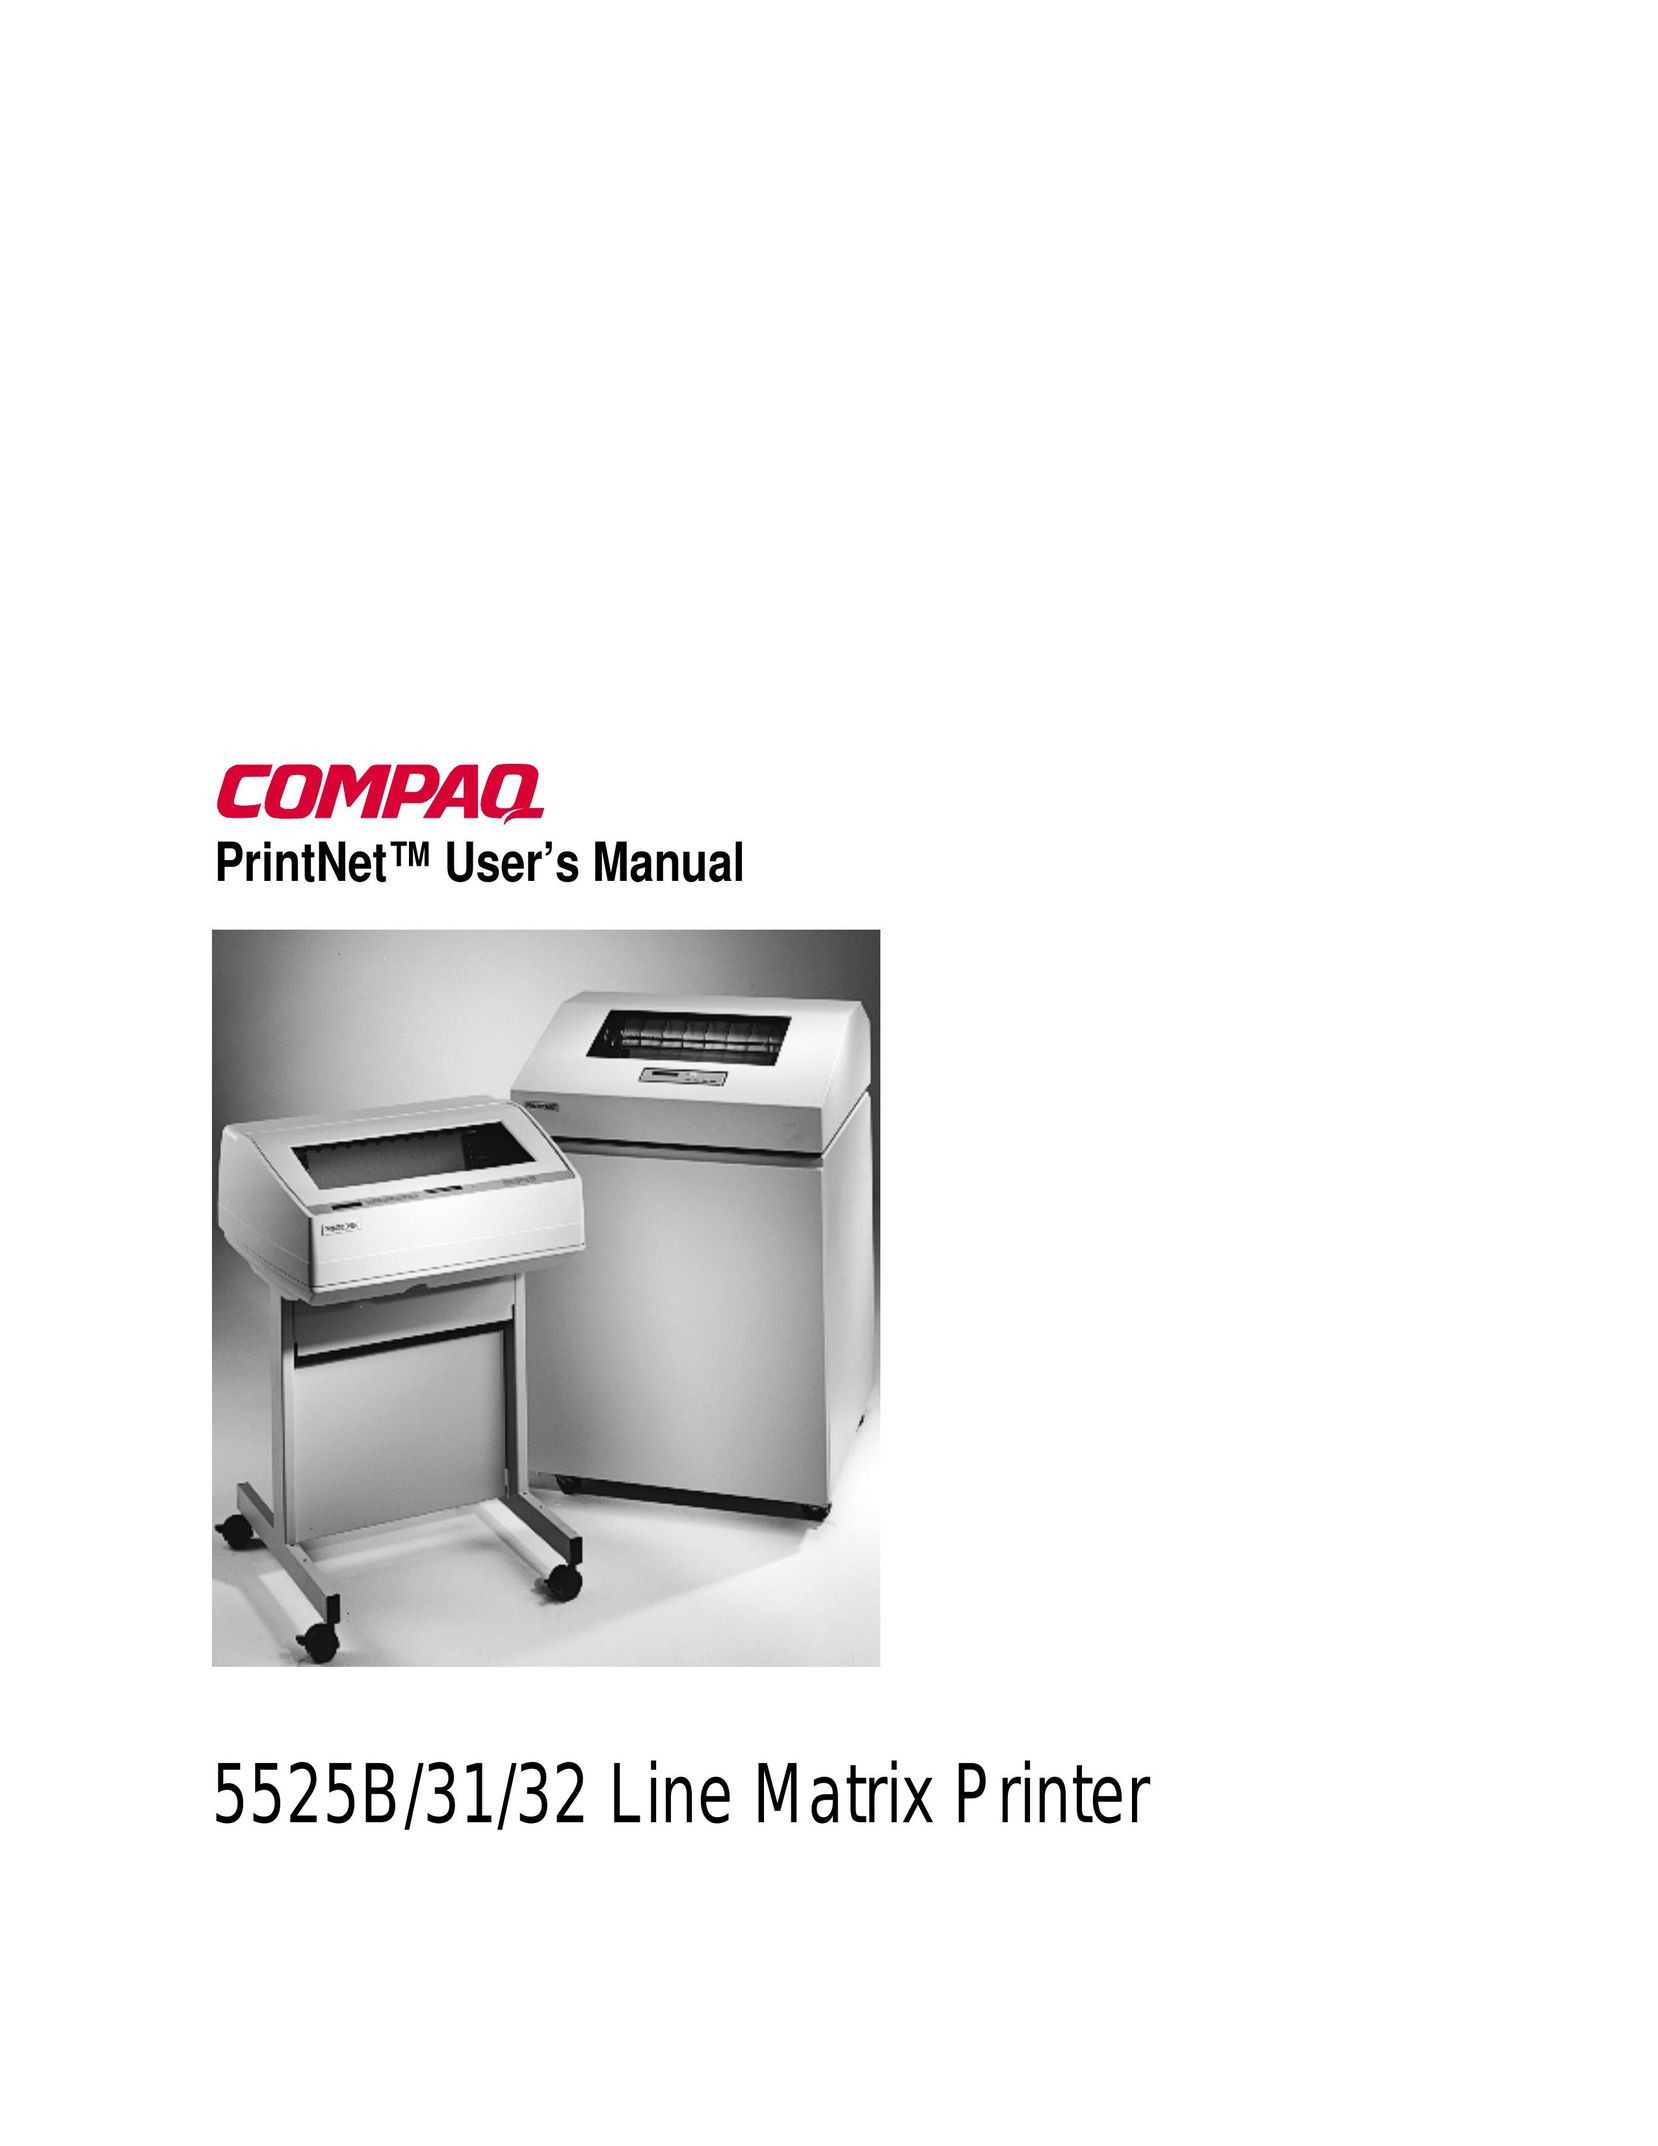 Compaq 5525B/31/32 Printer User Manual